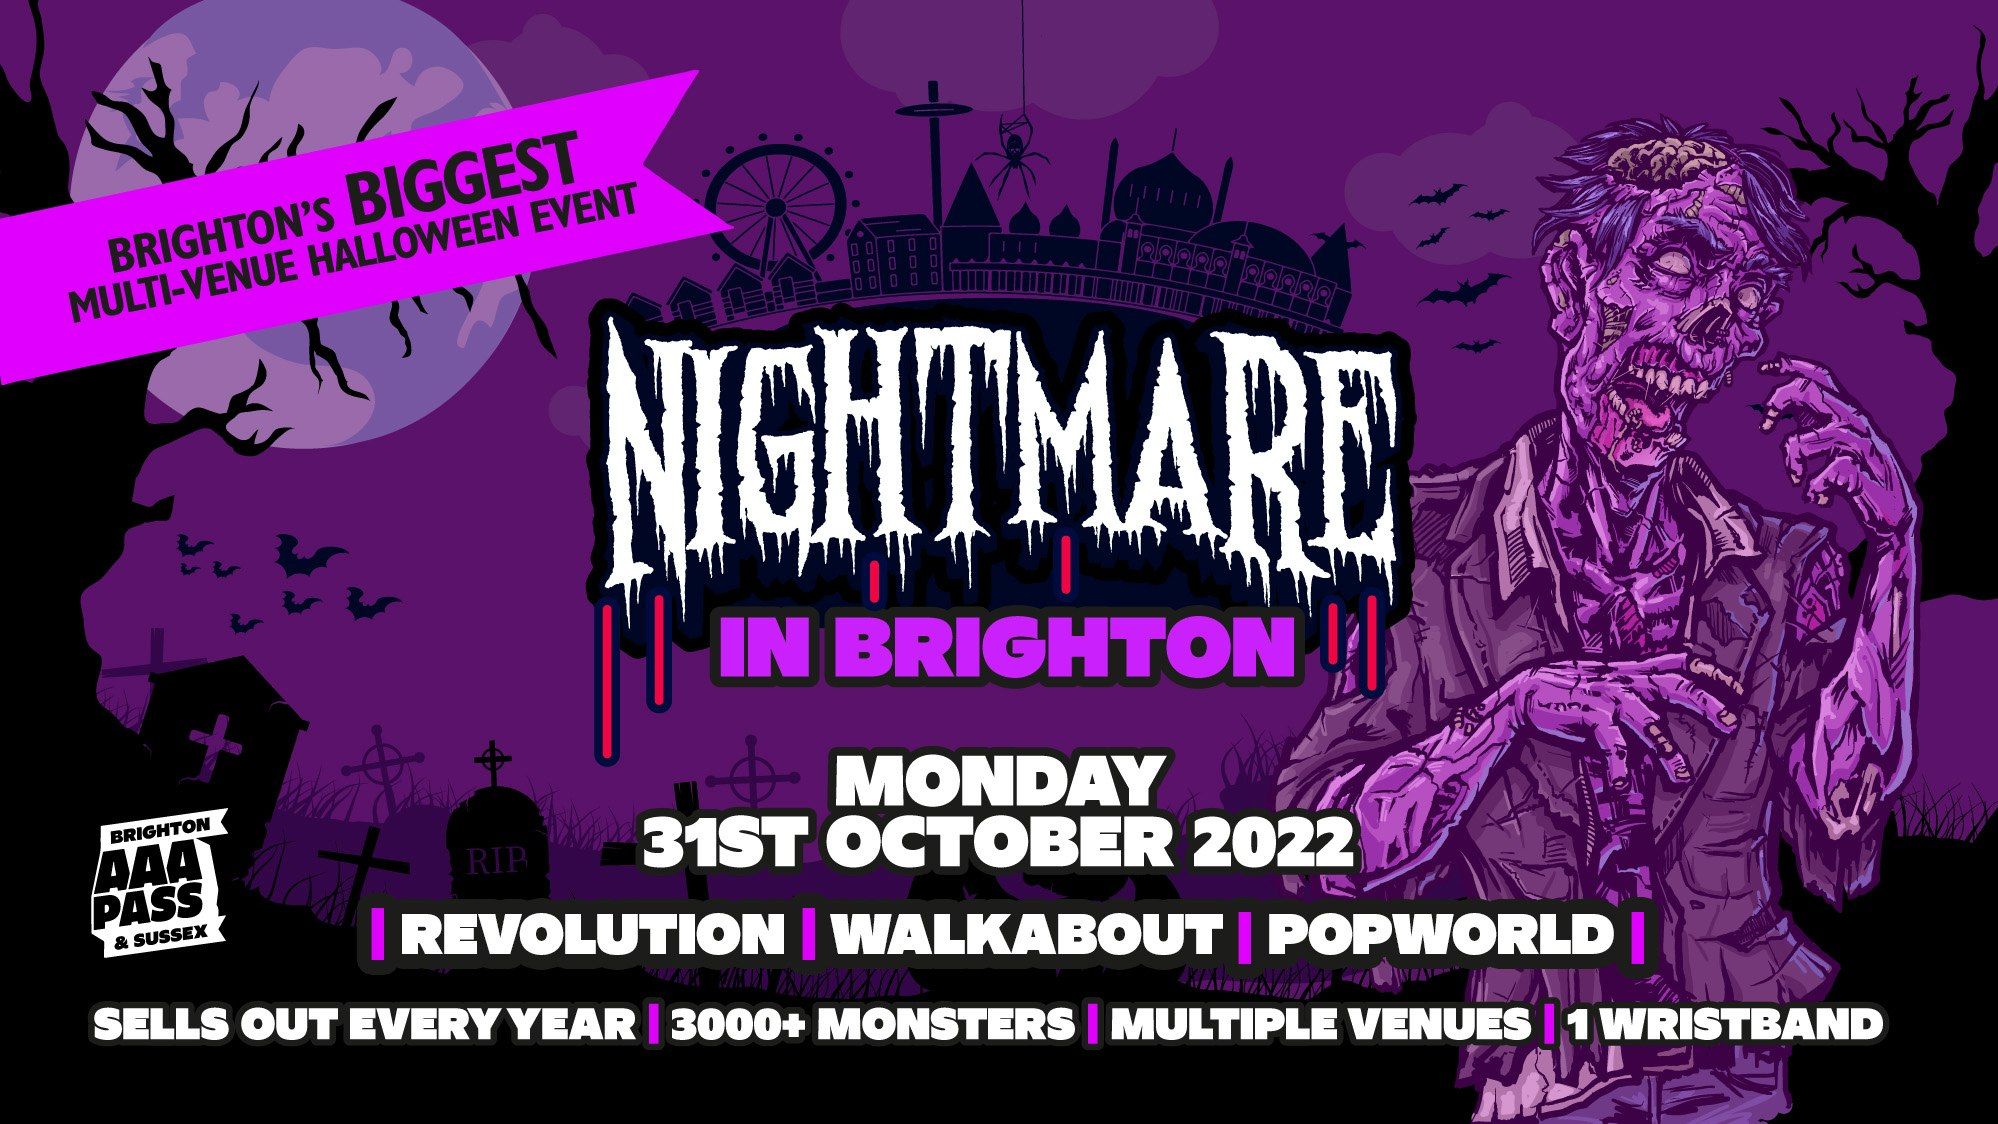 Nightmare in Brighton 2022 | Brighton’s BIGGEST Multi-venue Halloween Event